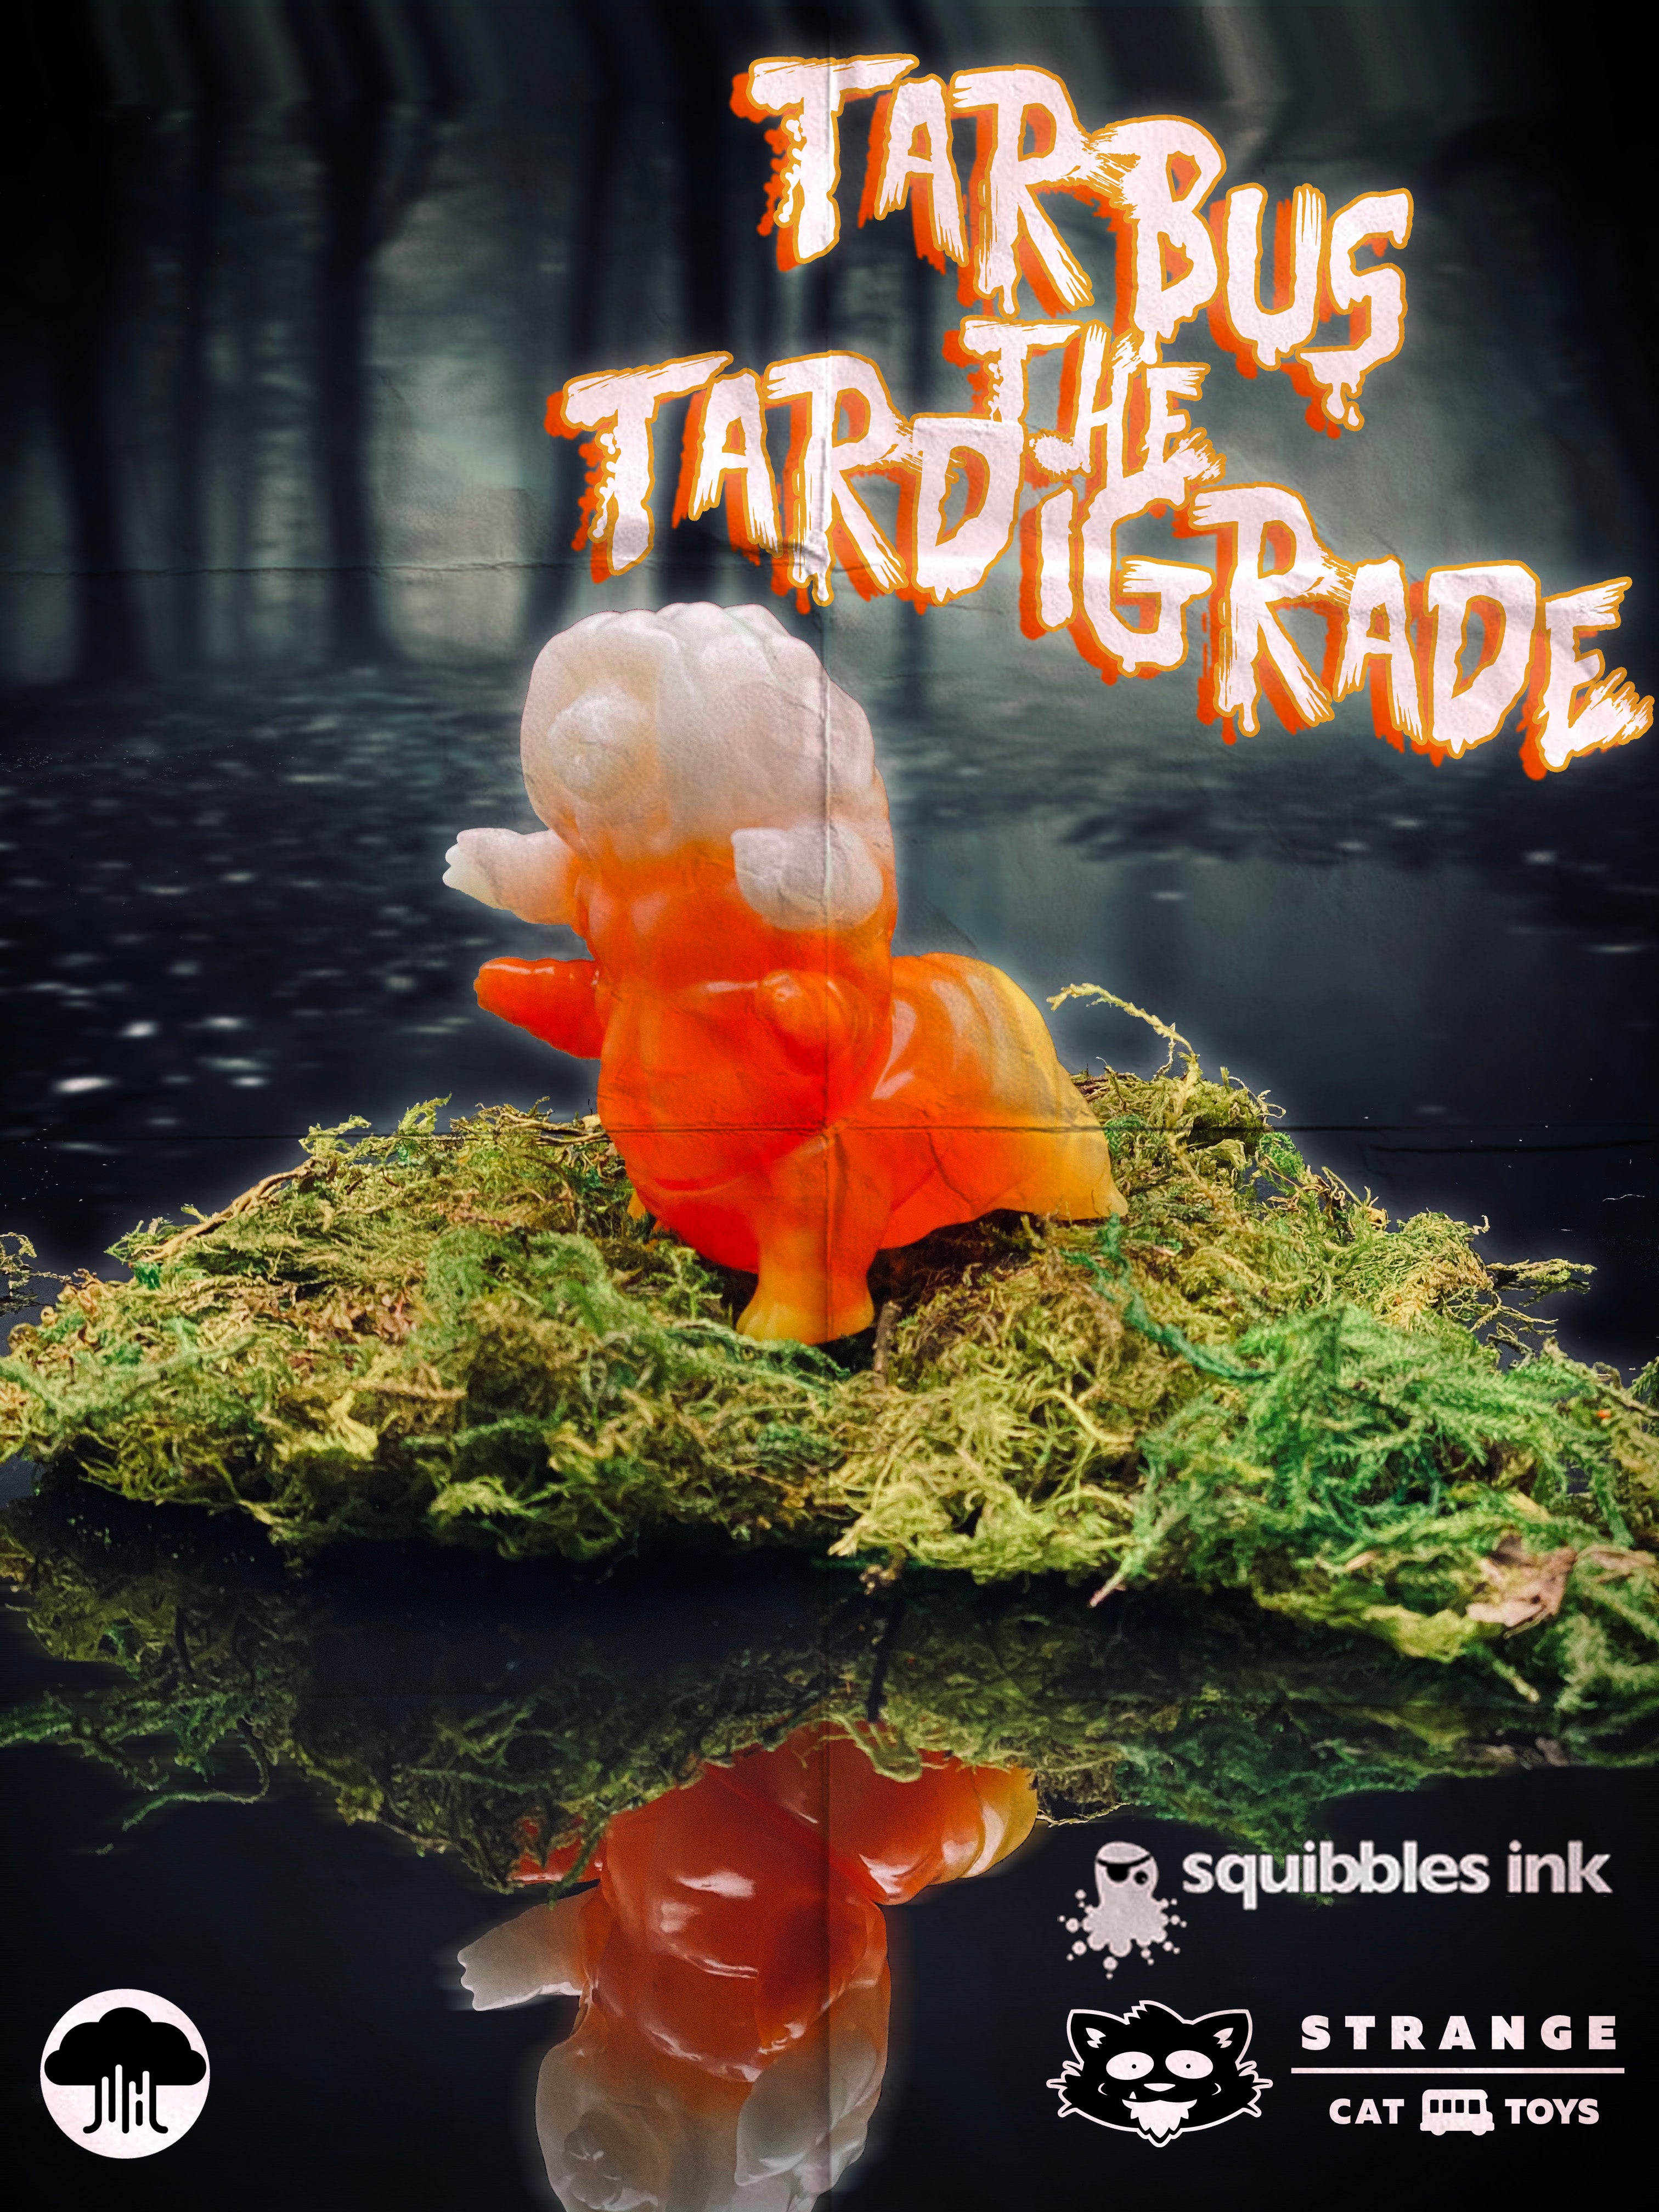 Tarbus the Tardigrade Candy Corn Exclusive by DoomCo Design